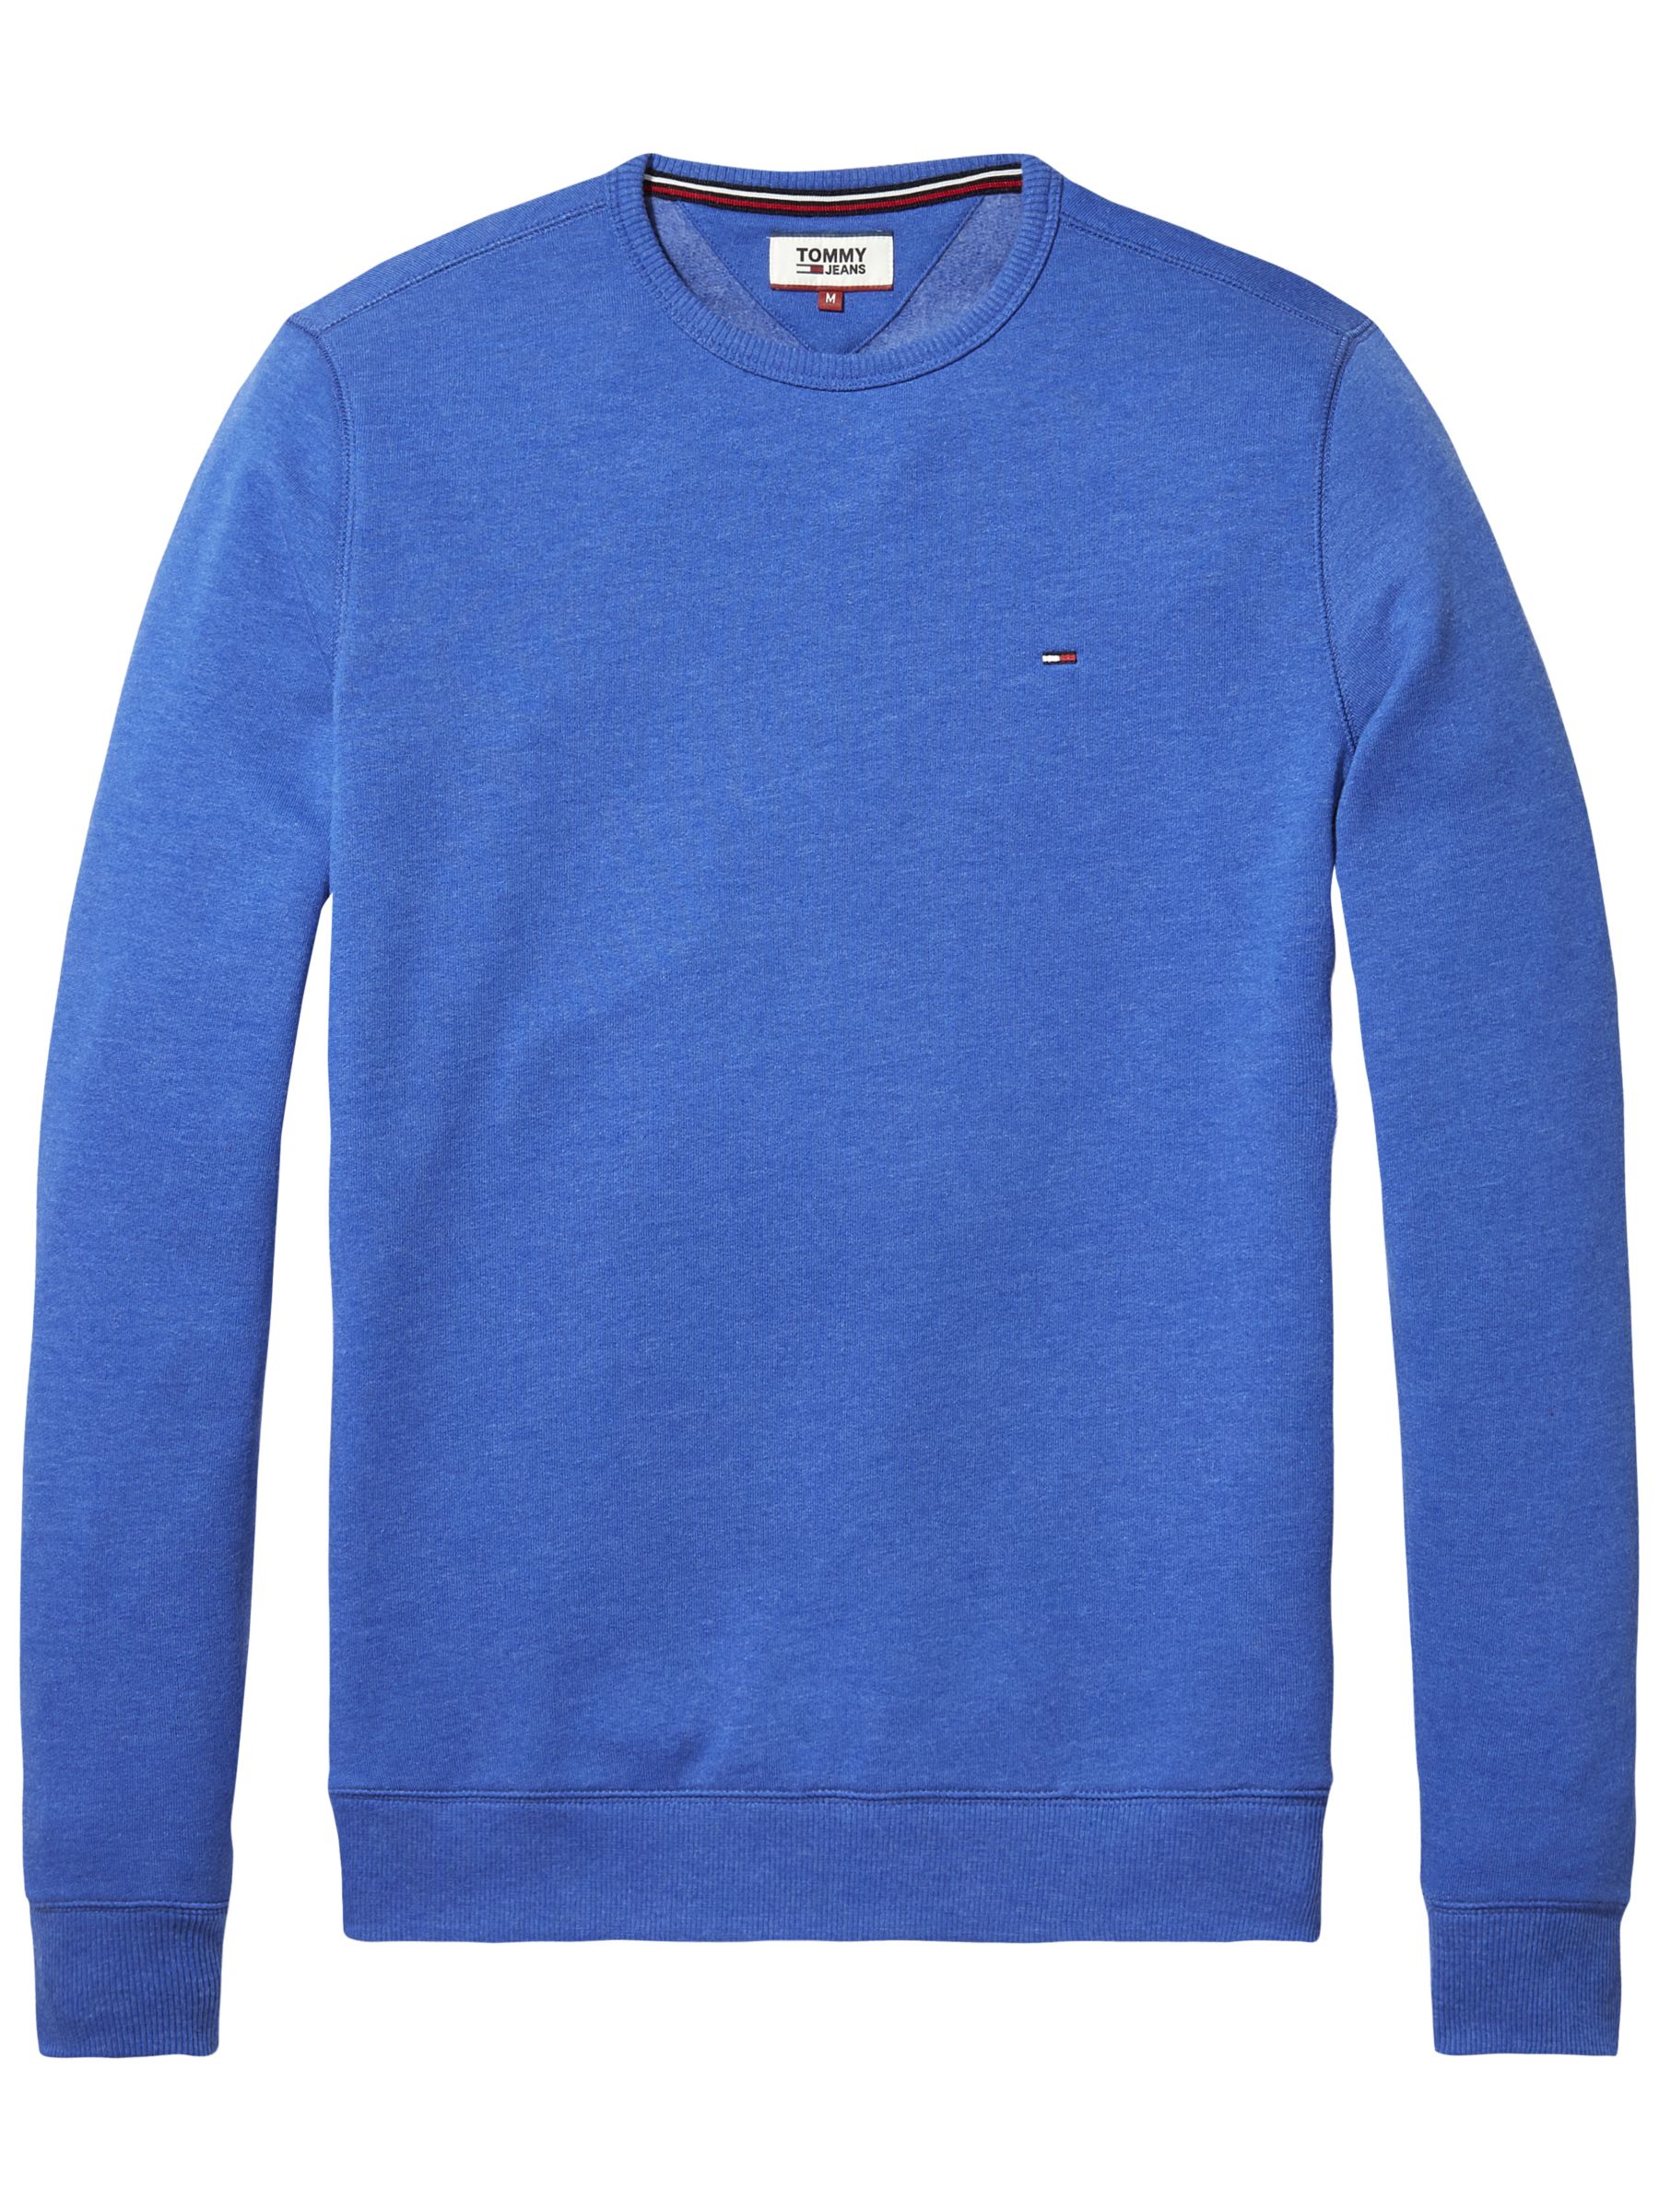 Tommy Jeans Crew Neck Sweatshirt, Nautical Blue